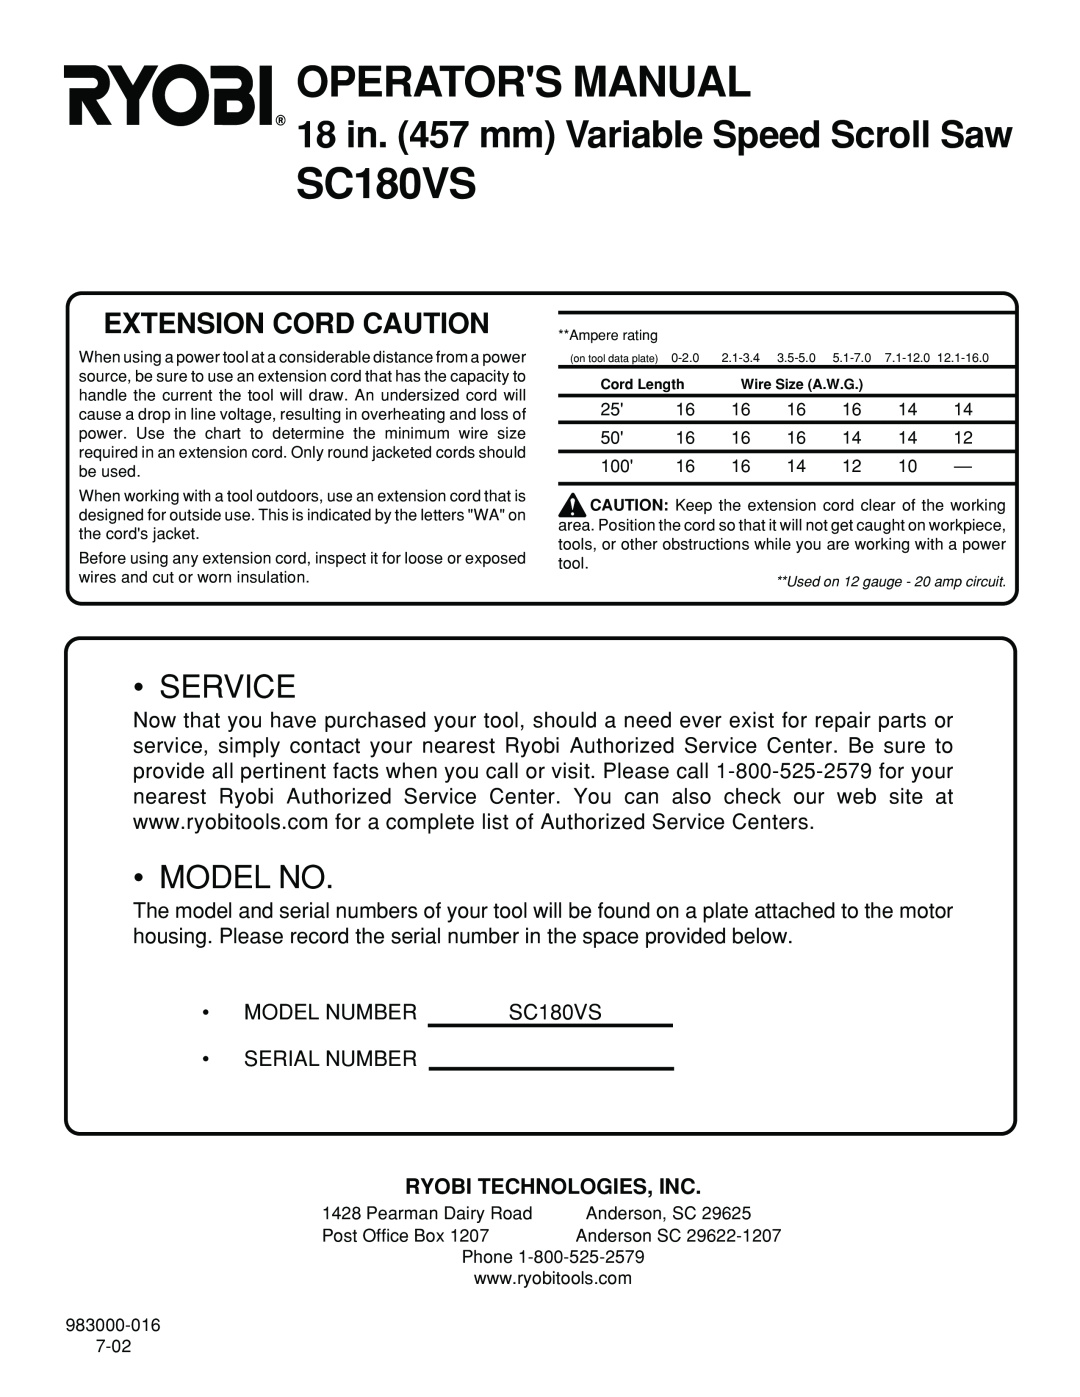 Ryobi SC180VS manual Operators Manual, Ryobi Technologies, Inc, 18 in. 457 mm Variable Speed Scroll Saw, Service, Model No 